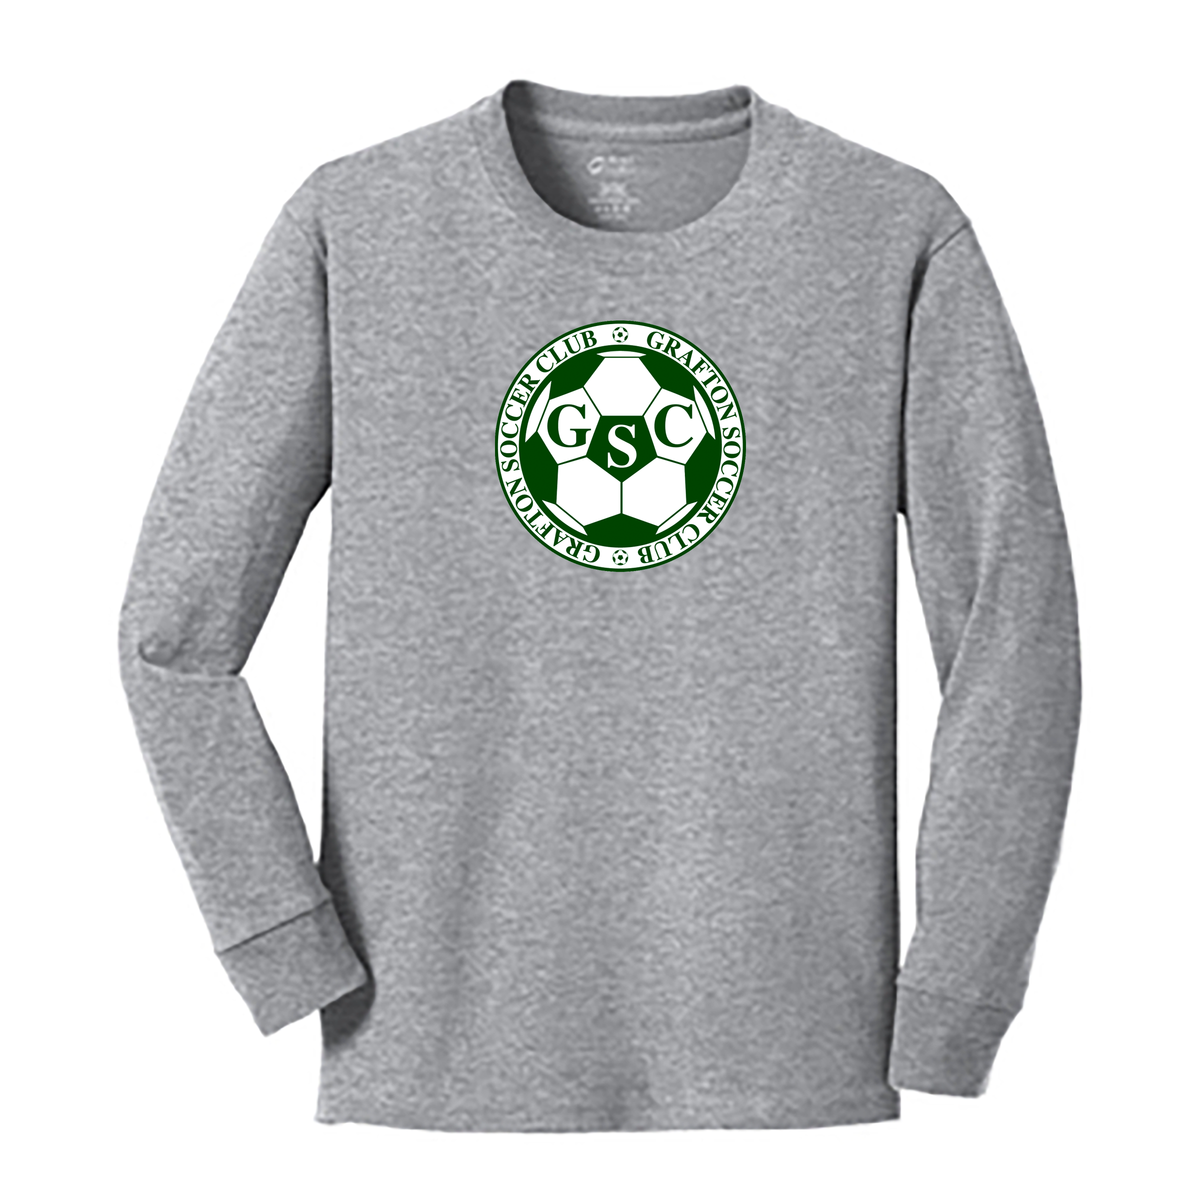 Grafton Youth Soccer Club Cotton Long Sleeve Shirt